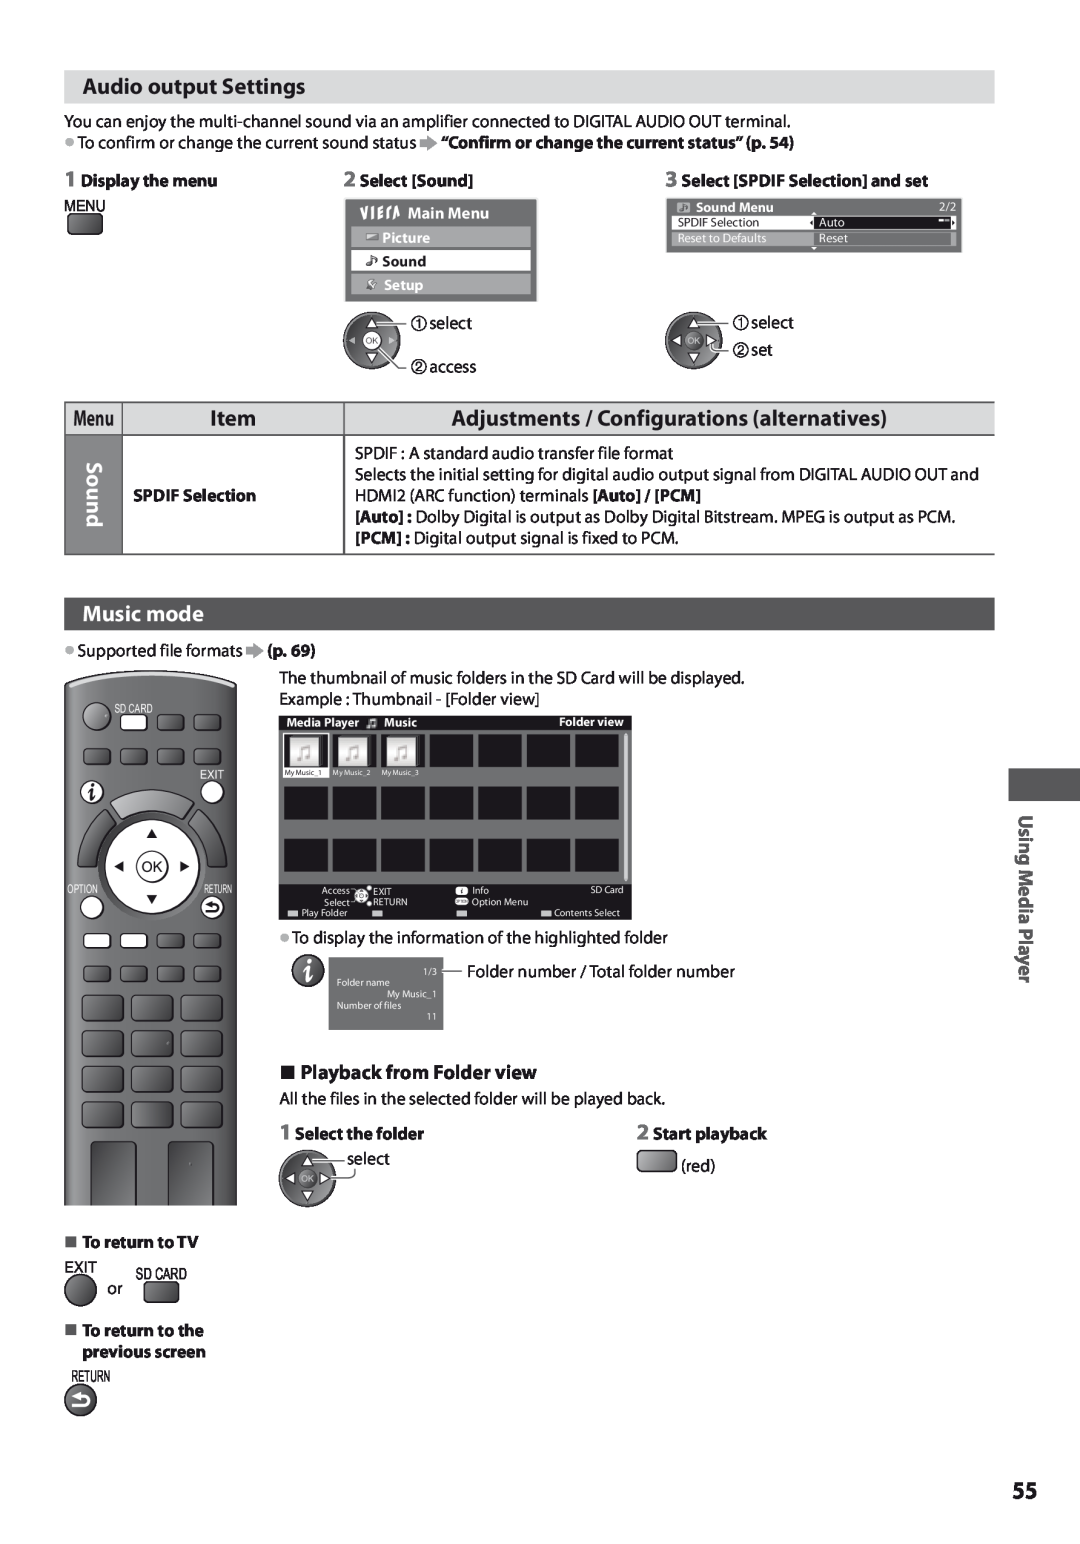 Panasonic TX-L32U3E Audio output Settings, Music mode, Playback from Folder view, Using Media Player, Select Sound 